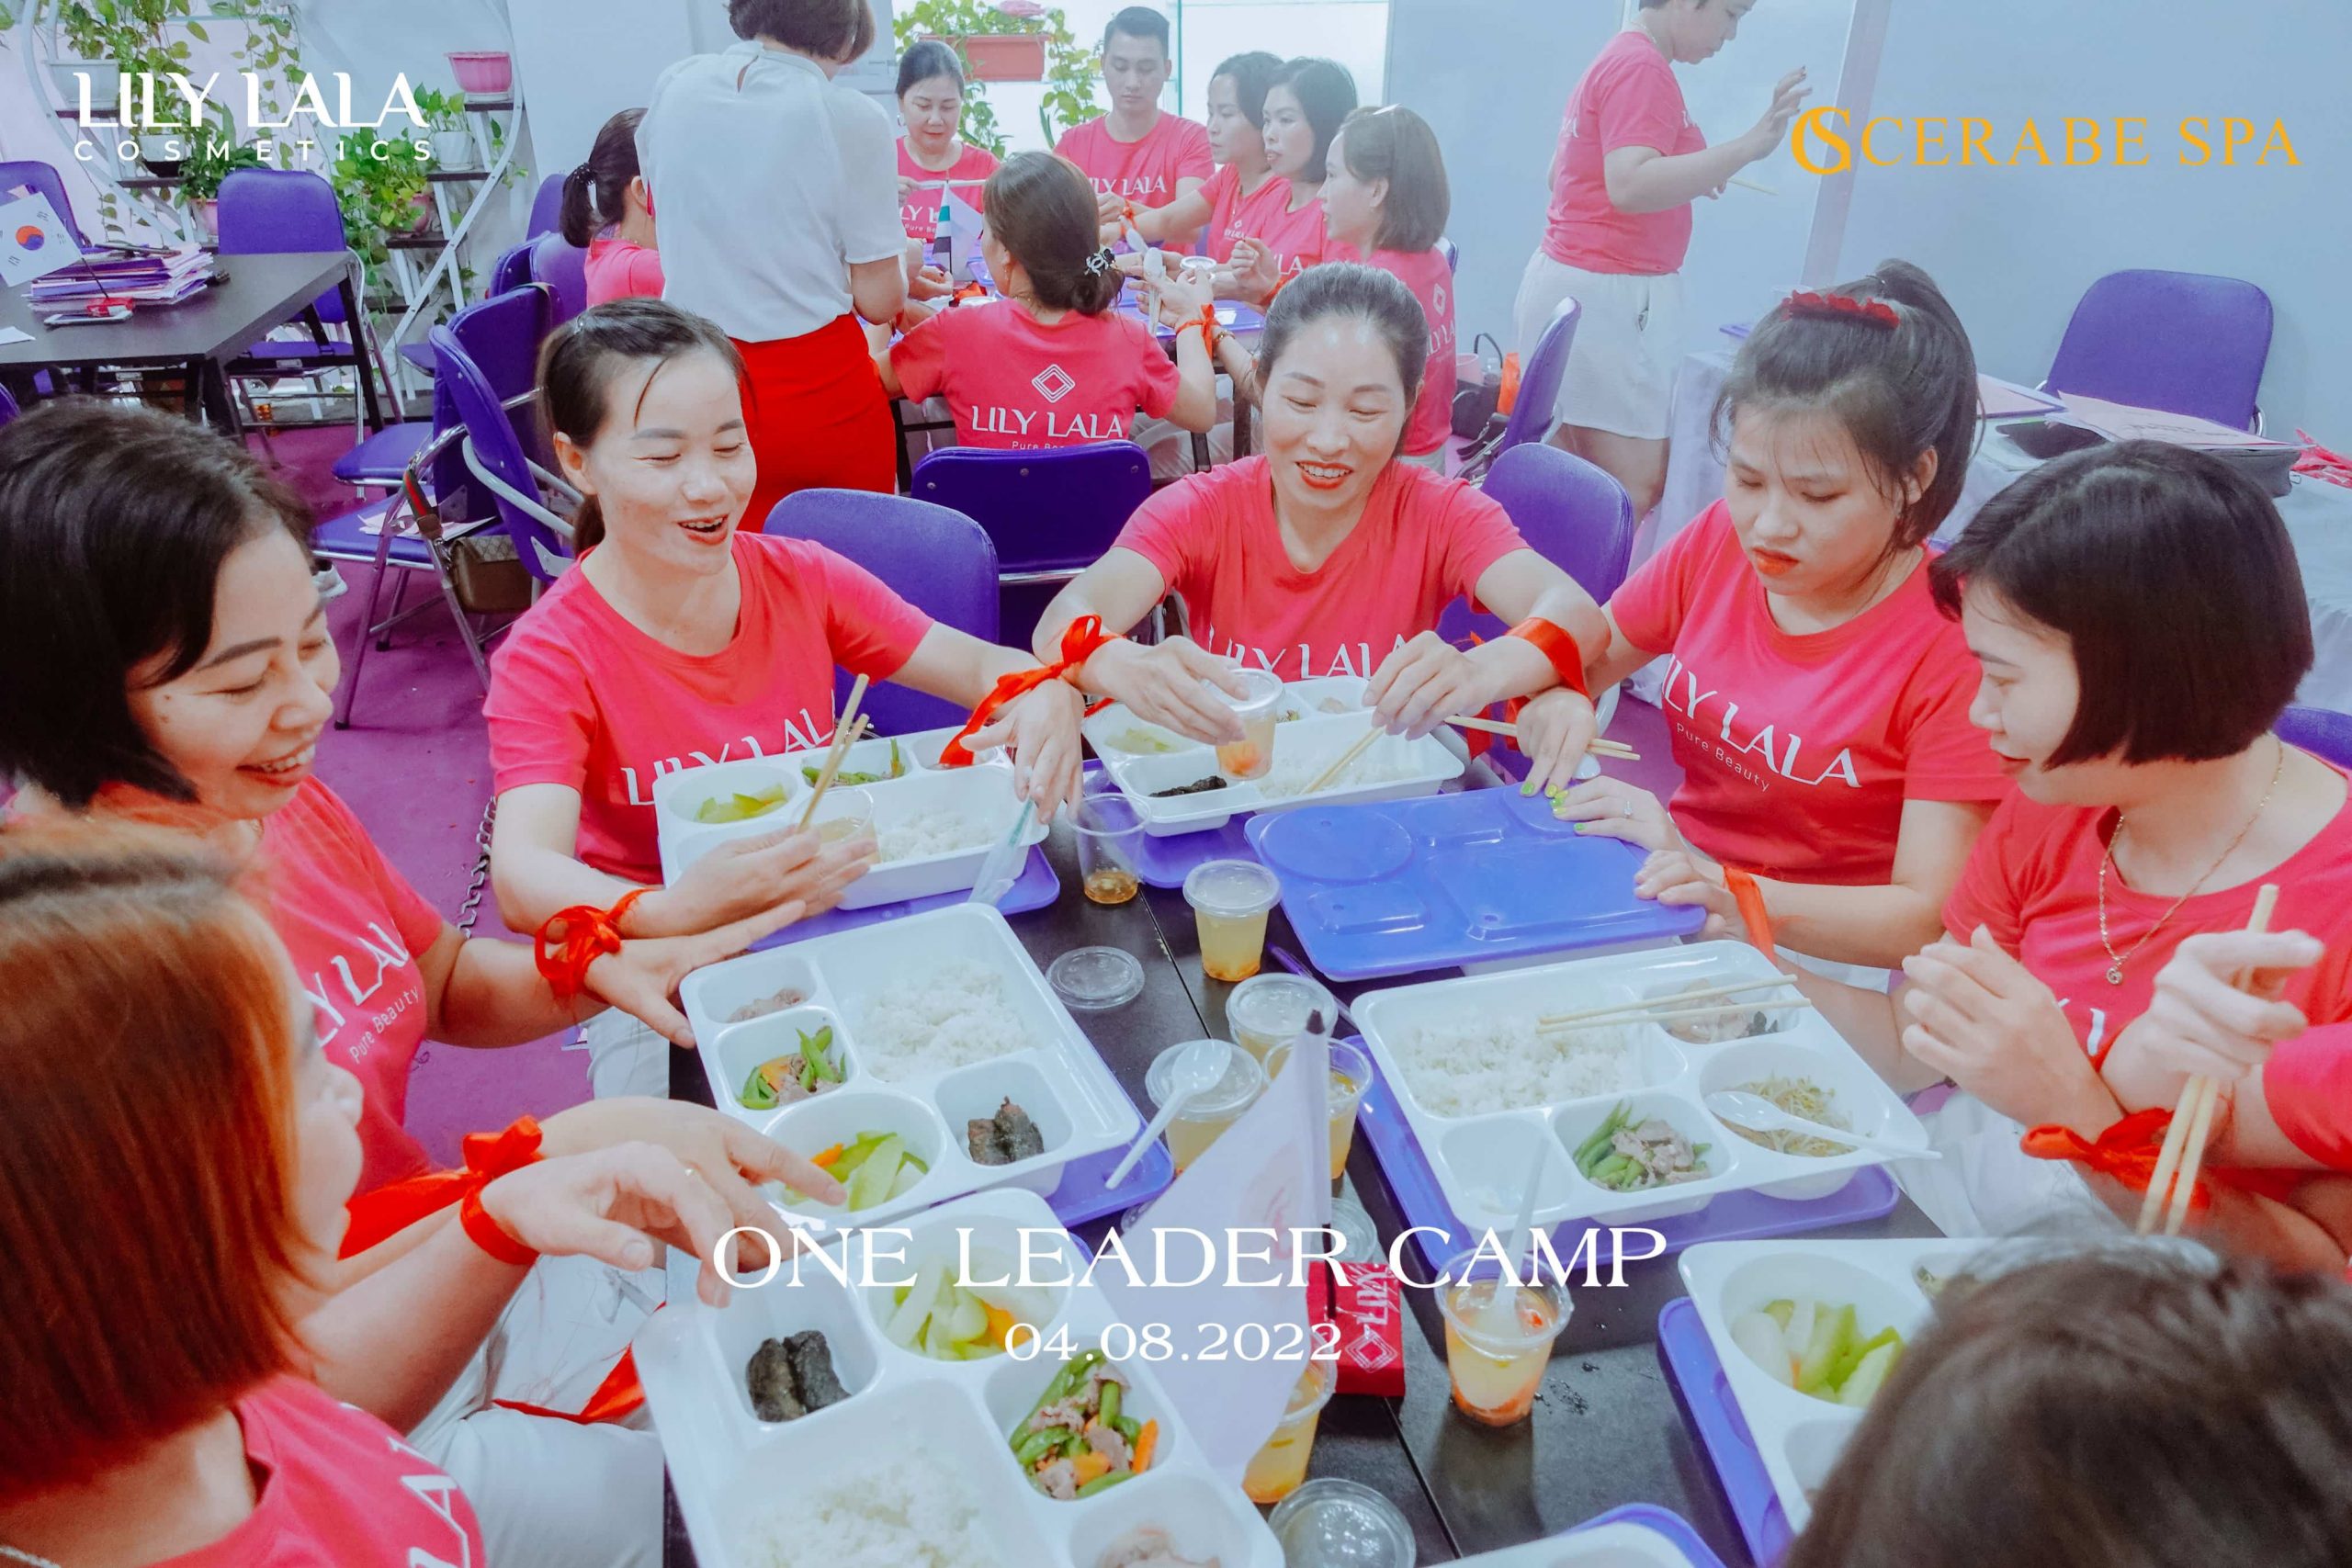 One Leader Camp